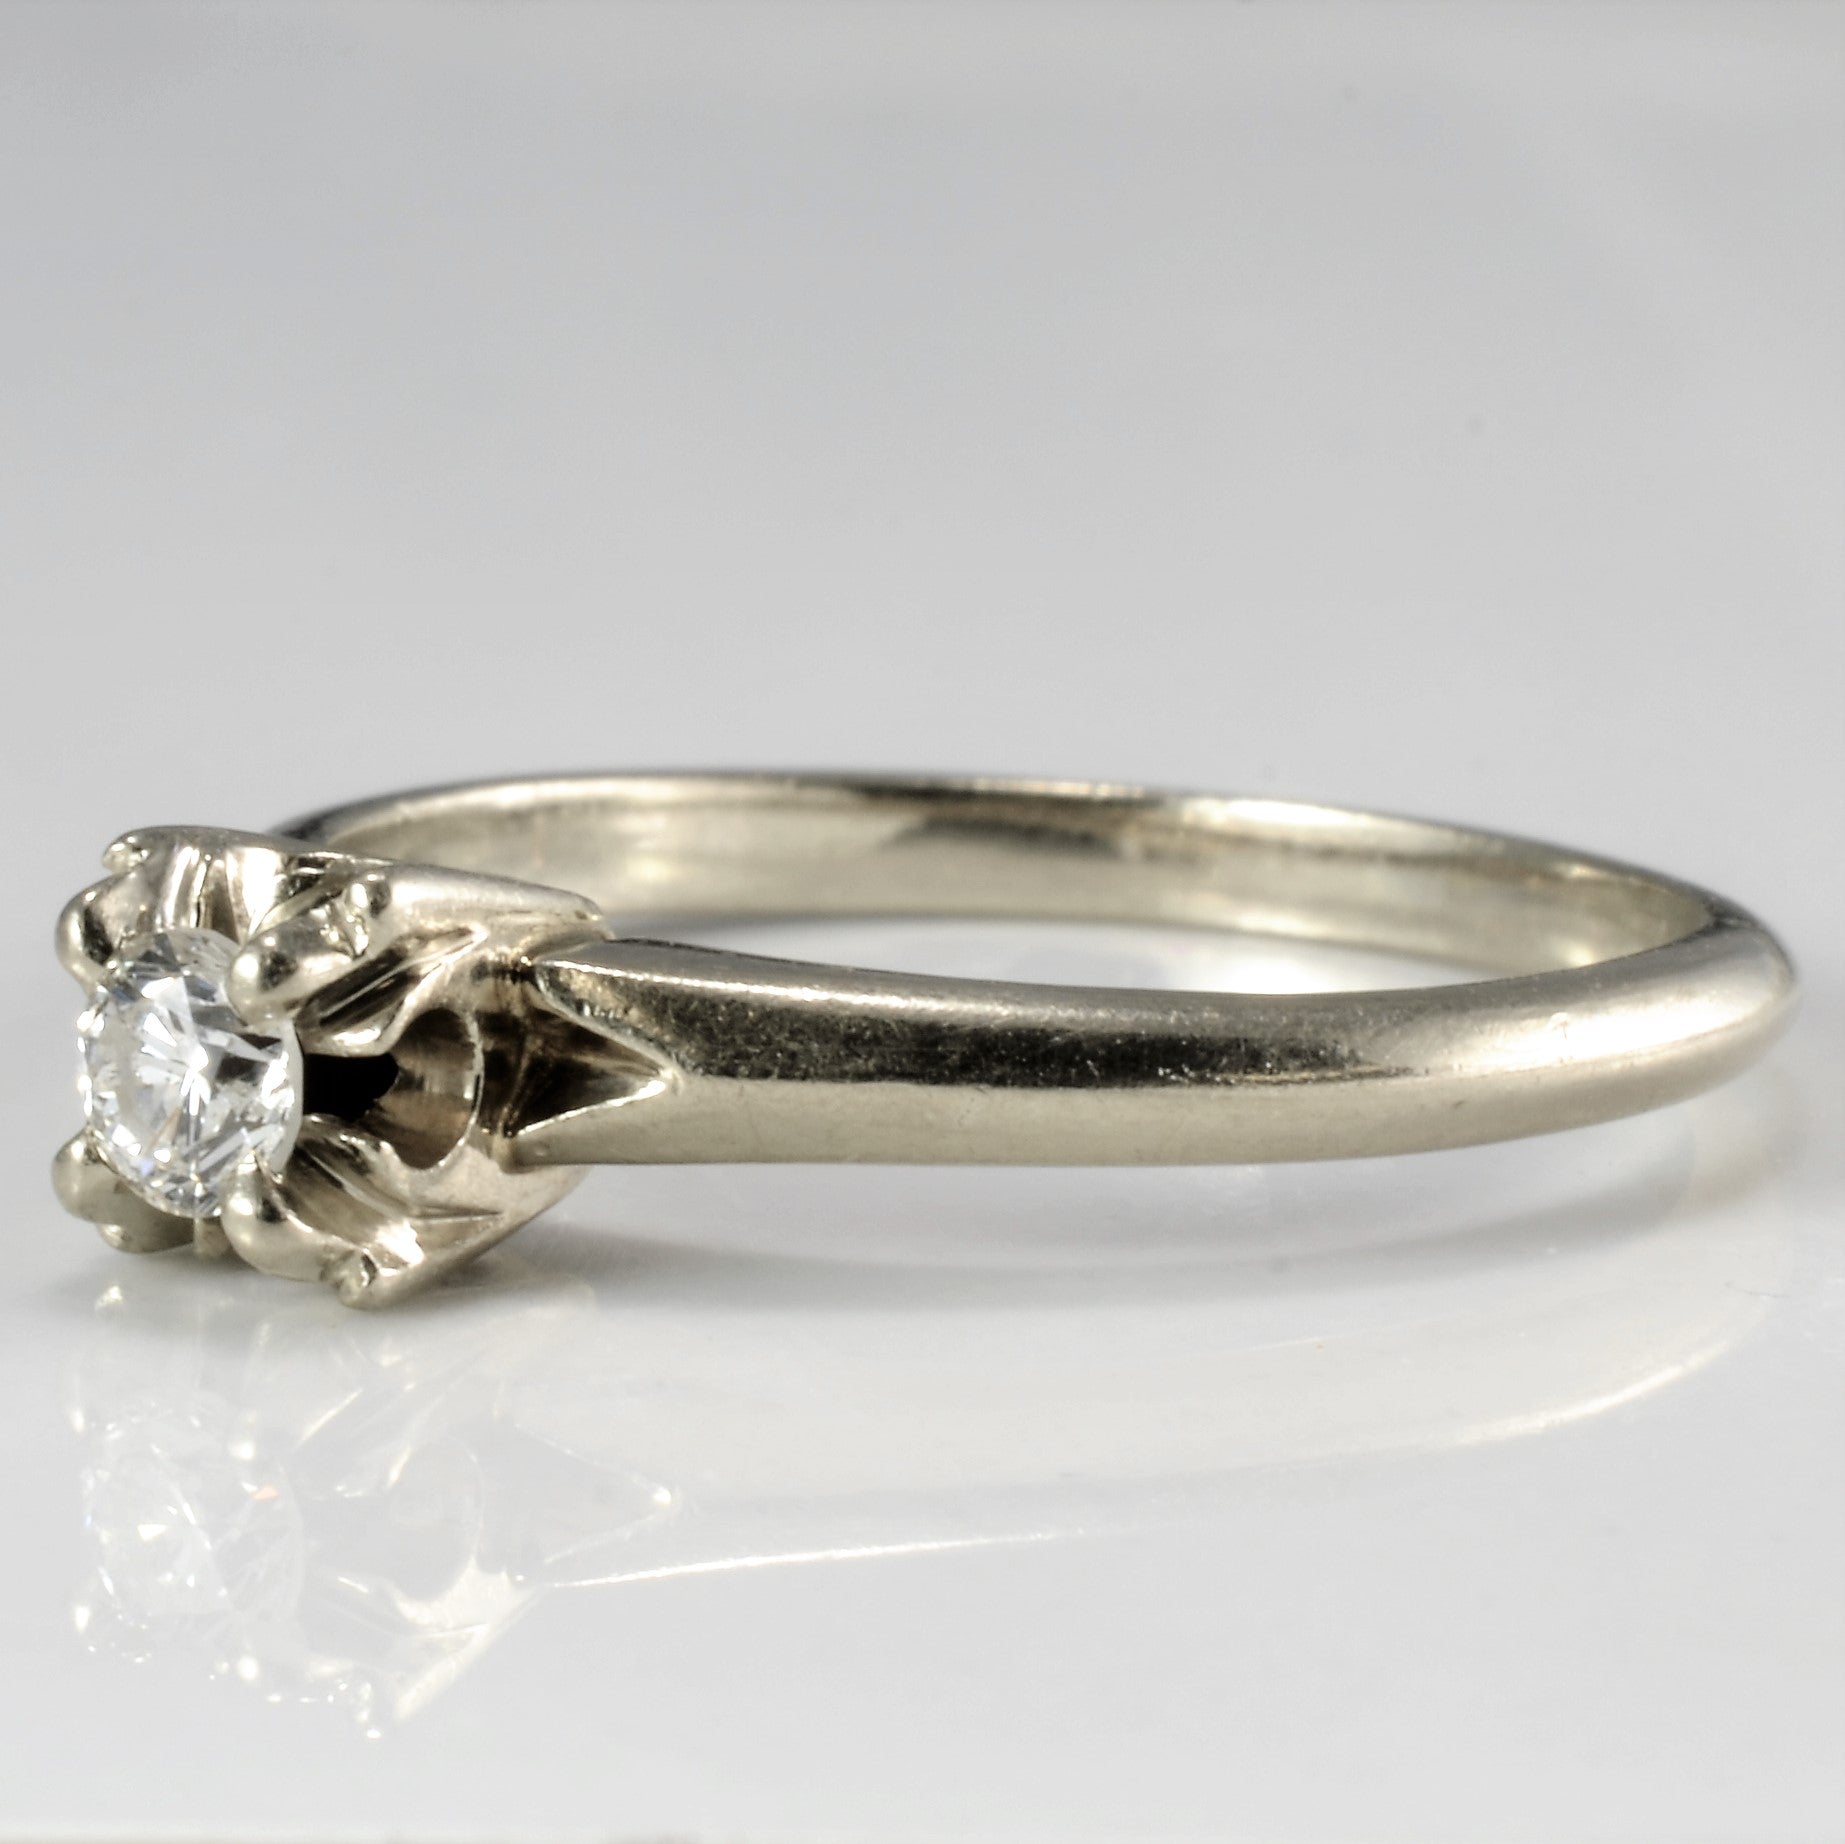 Vintage Solitaire Diamond Ring | 0.13 ct, SZ 7 |